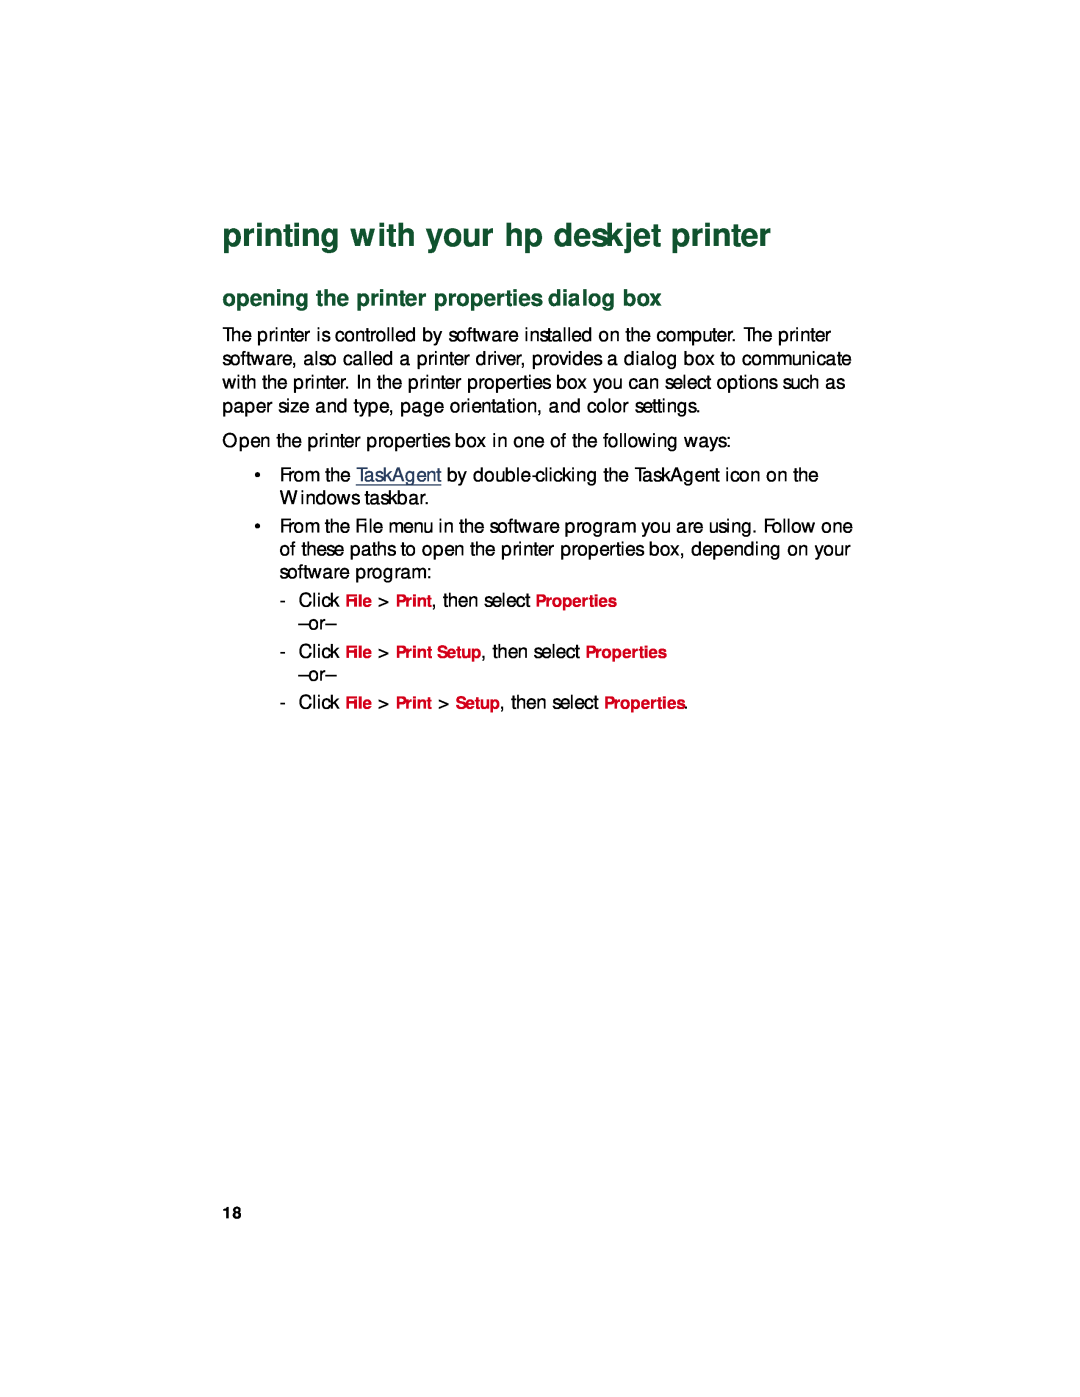 HP 940c, 920c, 948c manual printing with your hp deskjet printer, opening the printer properties dialog box 